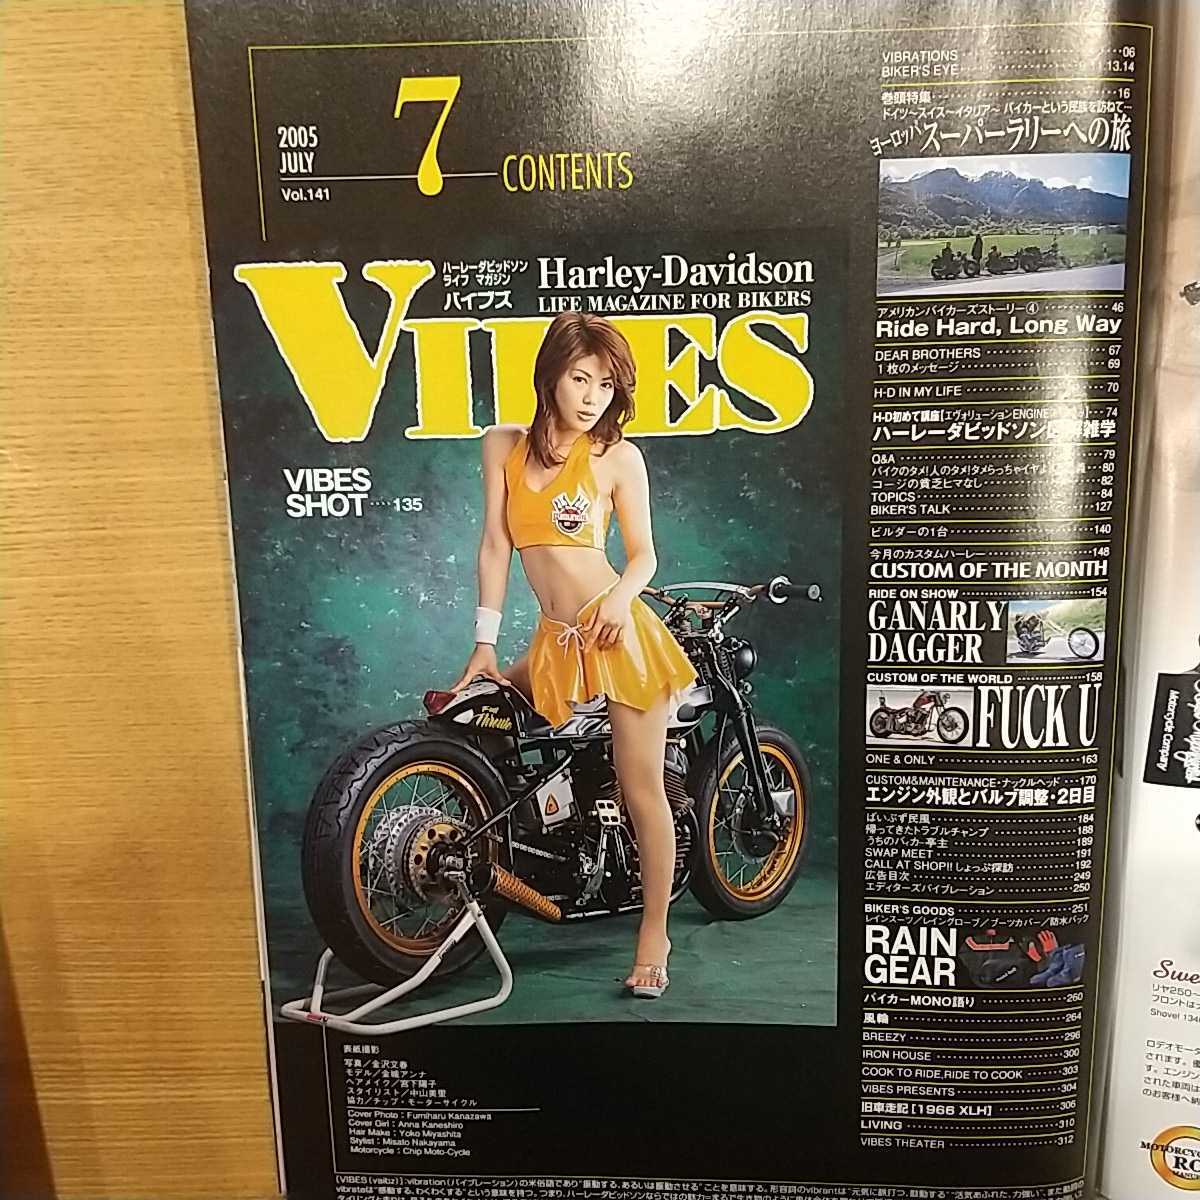 VIBES 2005 JULY Vol.141ba Eve s gold castle Anna Harley Davidson life magazine 